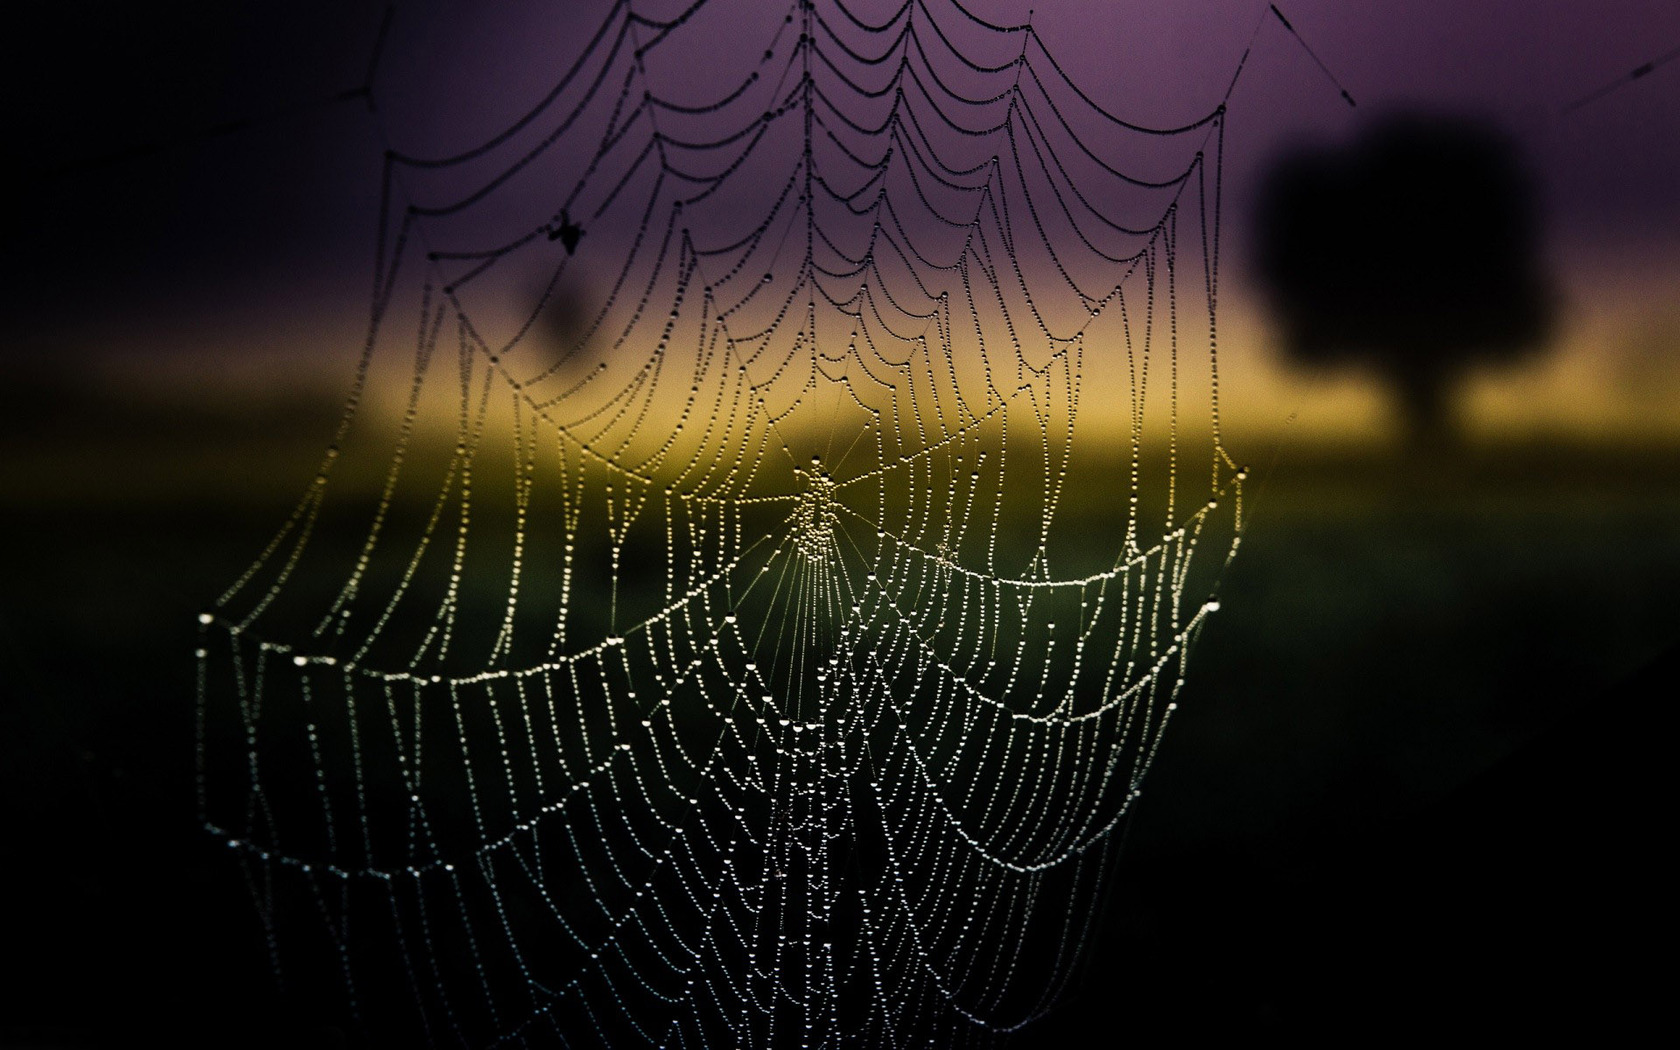 Wet spider web wallpaper 11774